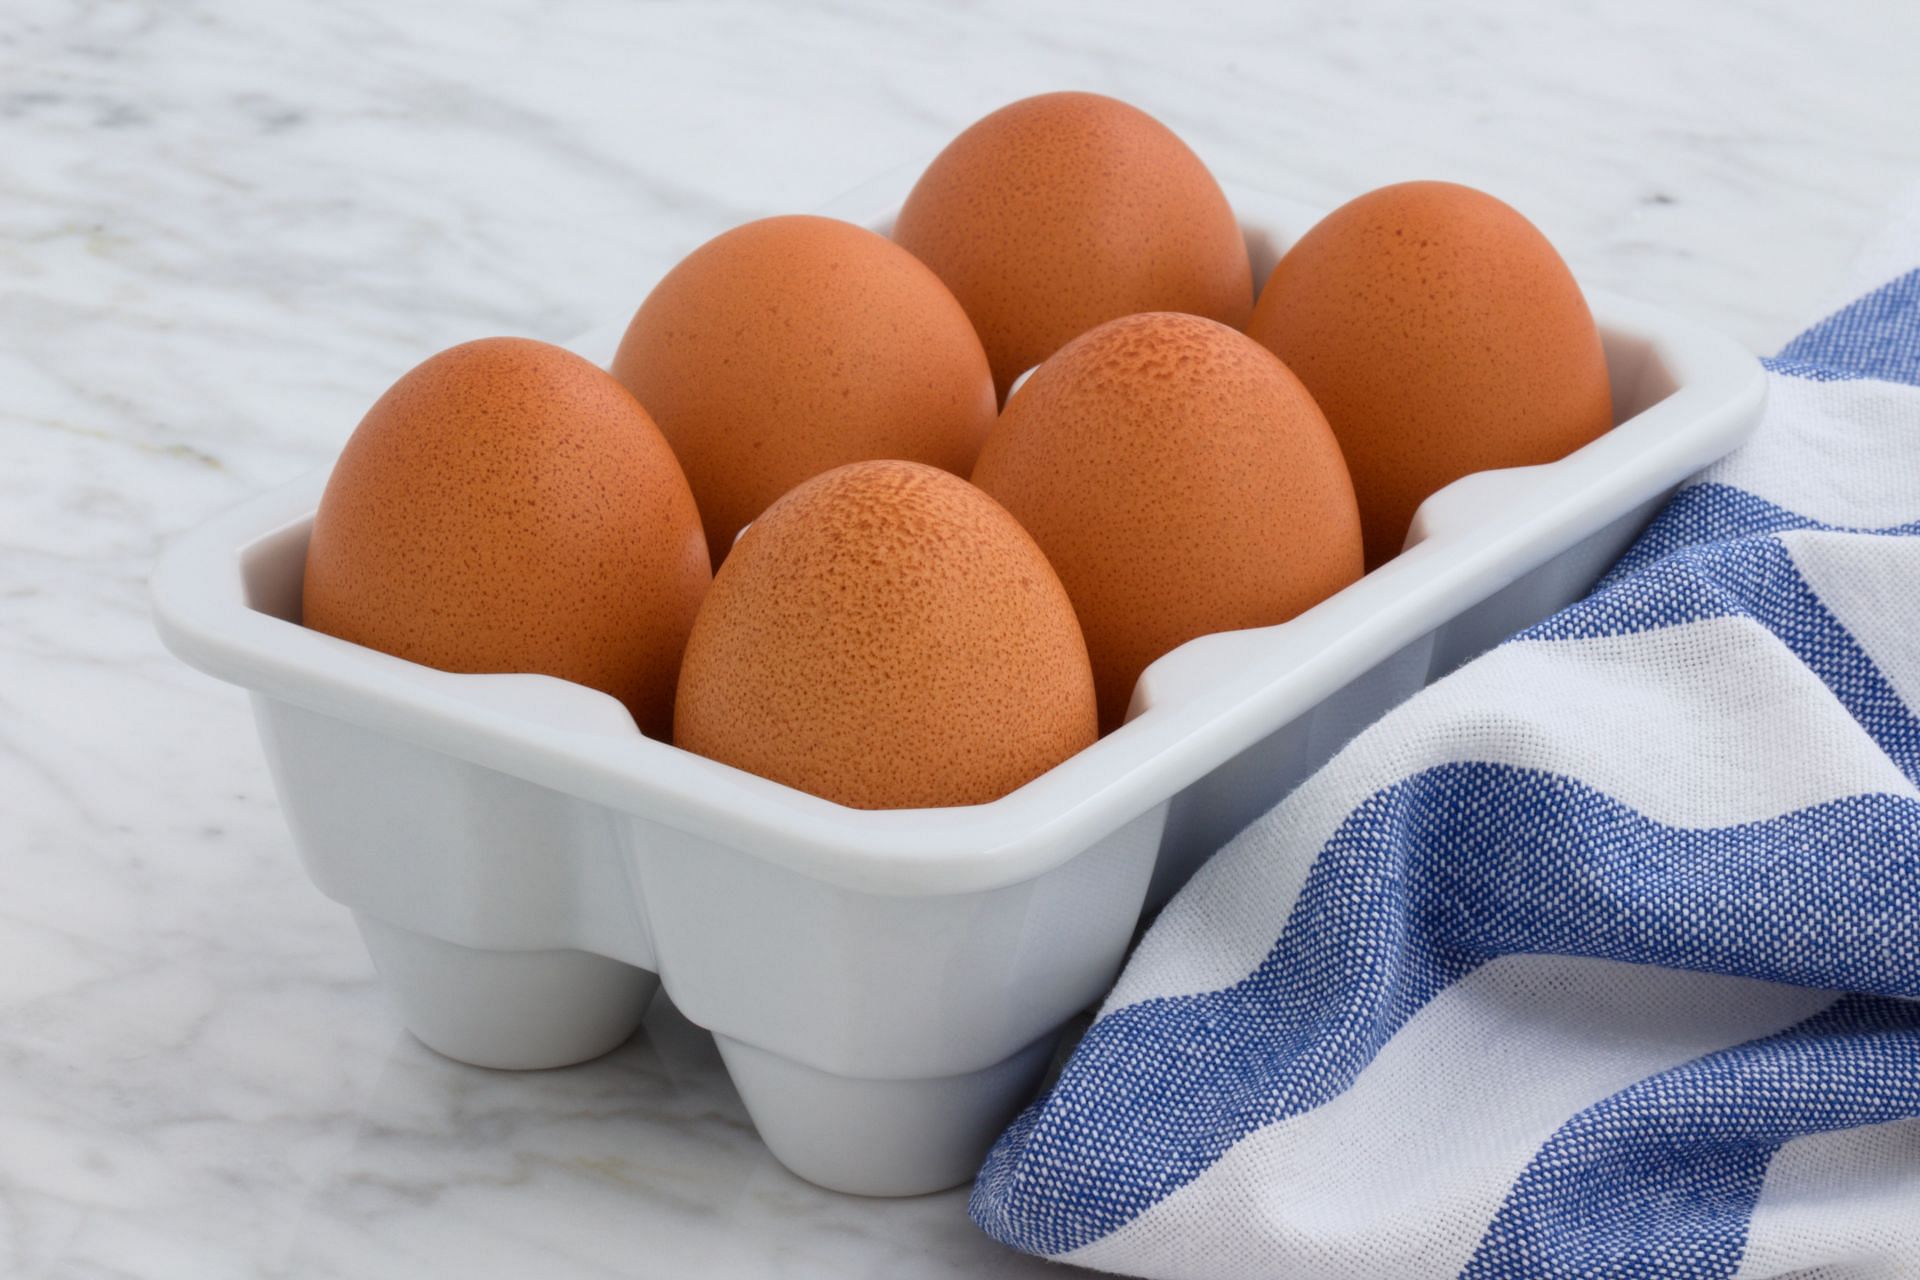 Eggs are a good source of protein. (Image via Unsplash / Estudio Gourmet)